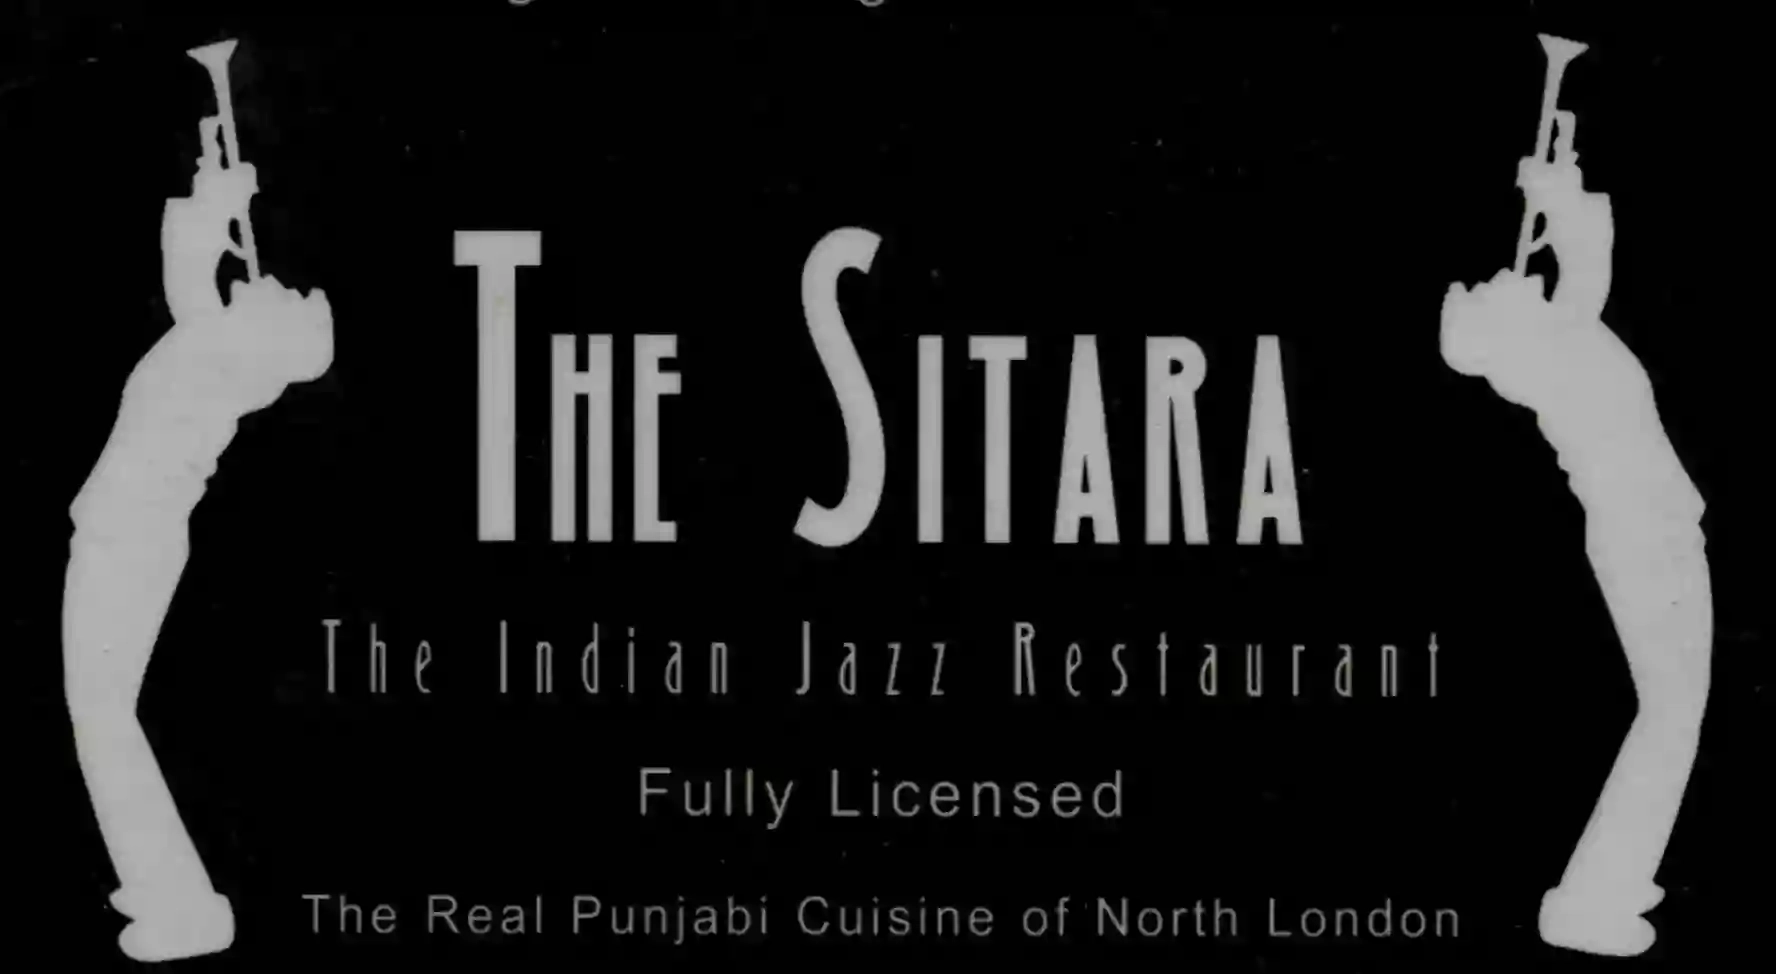 The Sitara